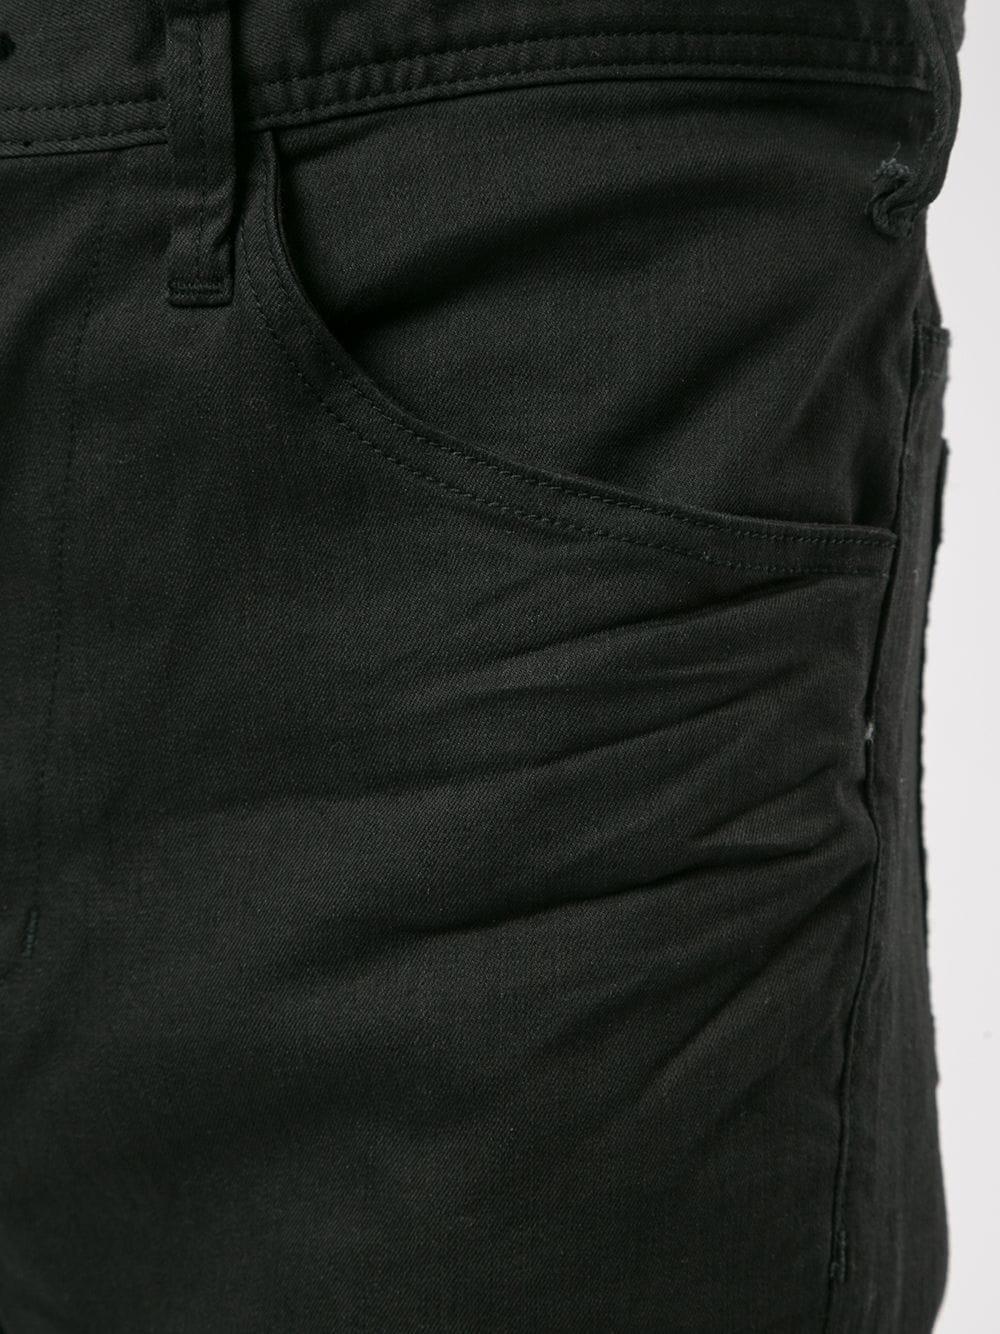 Julius Denim Curved Slim Fit Jeans in Black for Men - Lyst